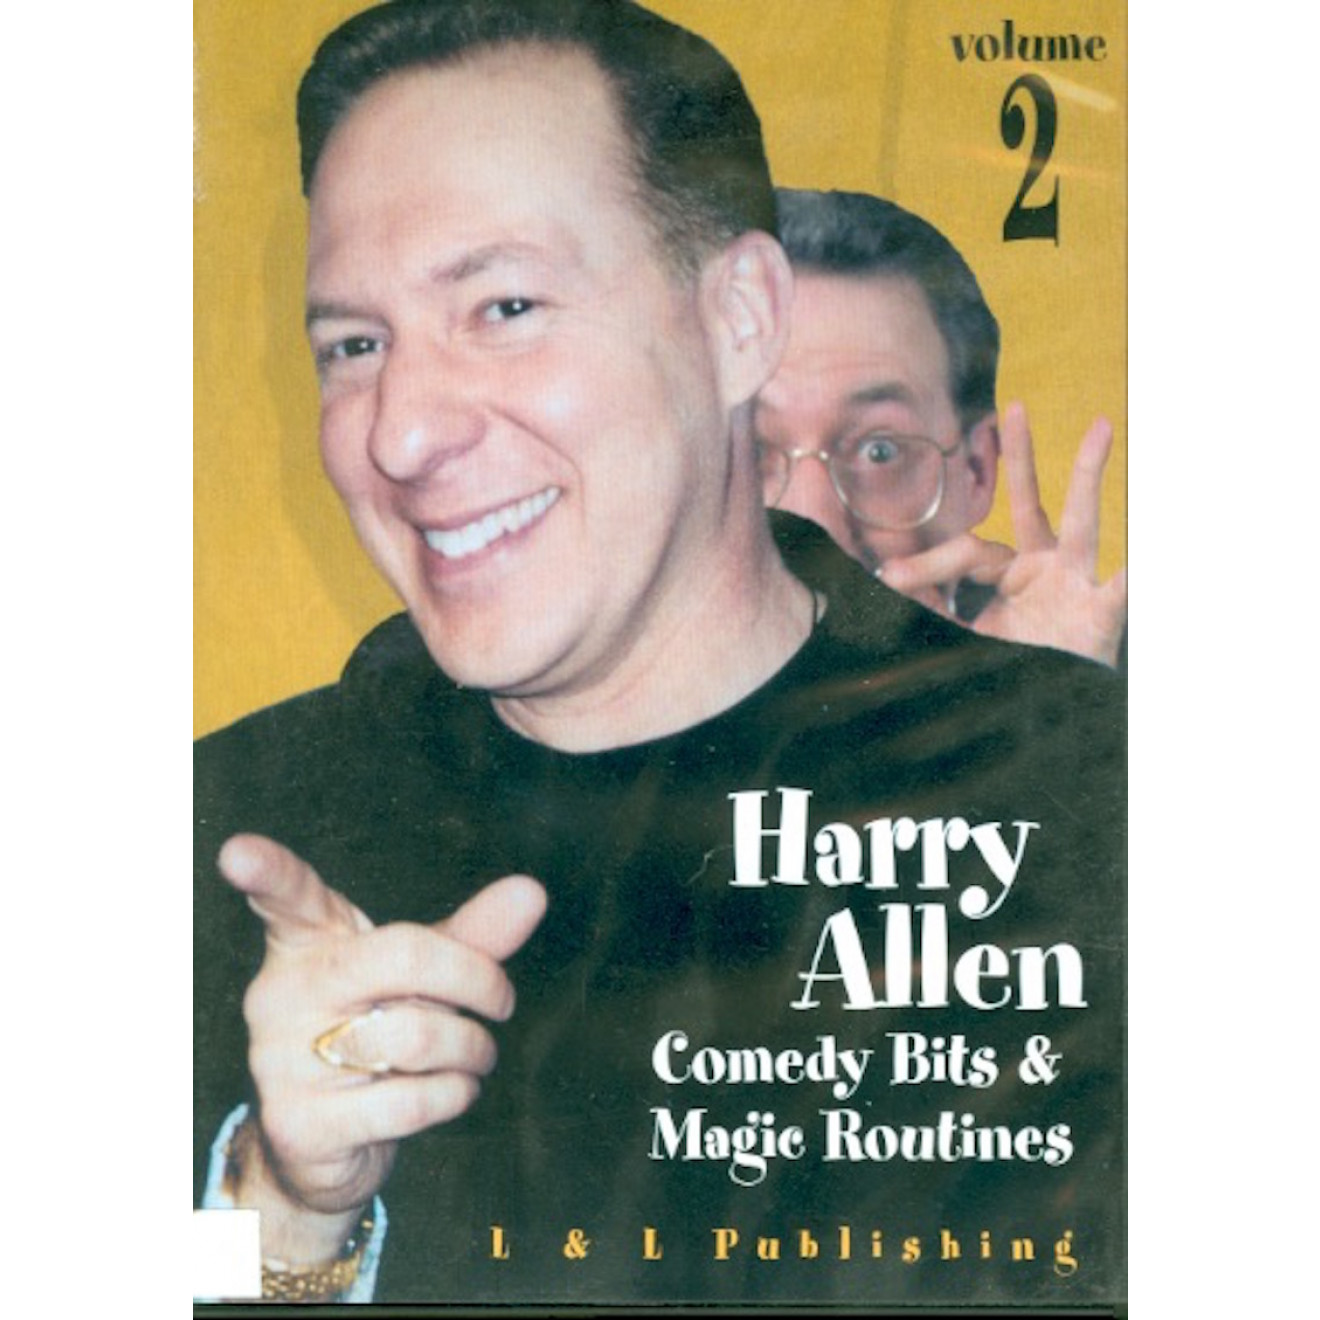 Comedy Bits & Magic Routines, Volume 2